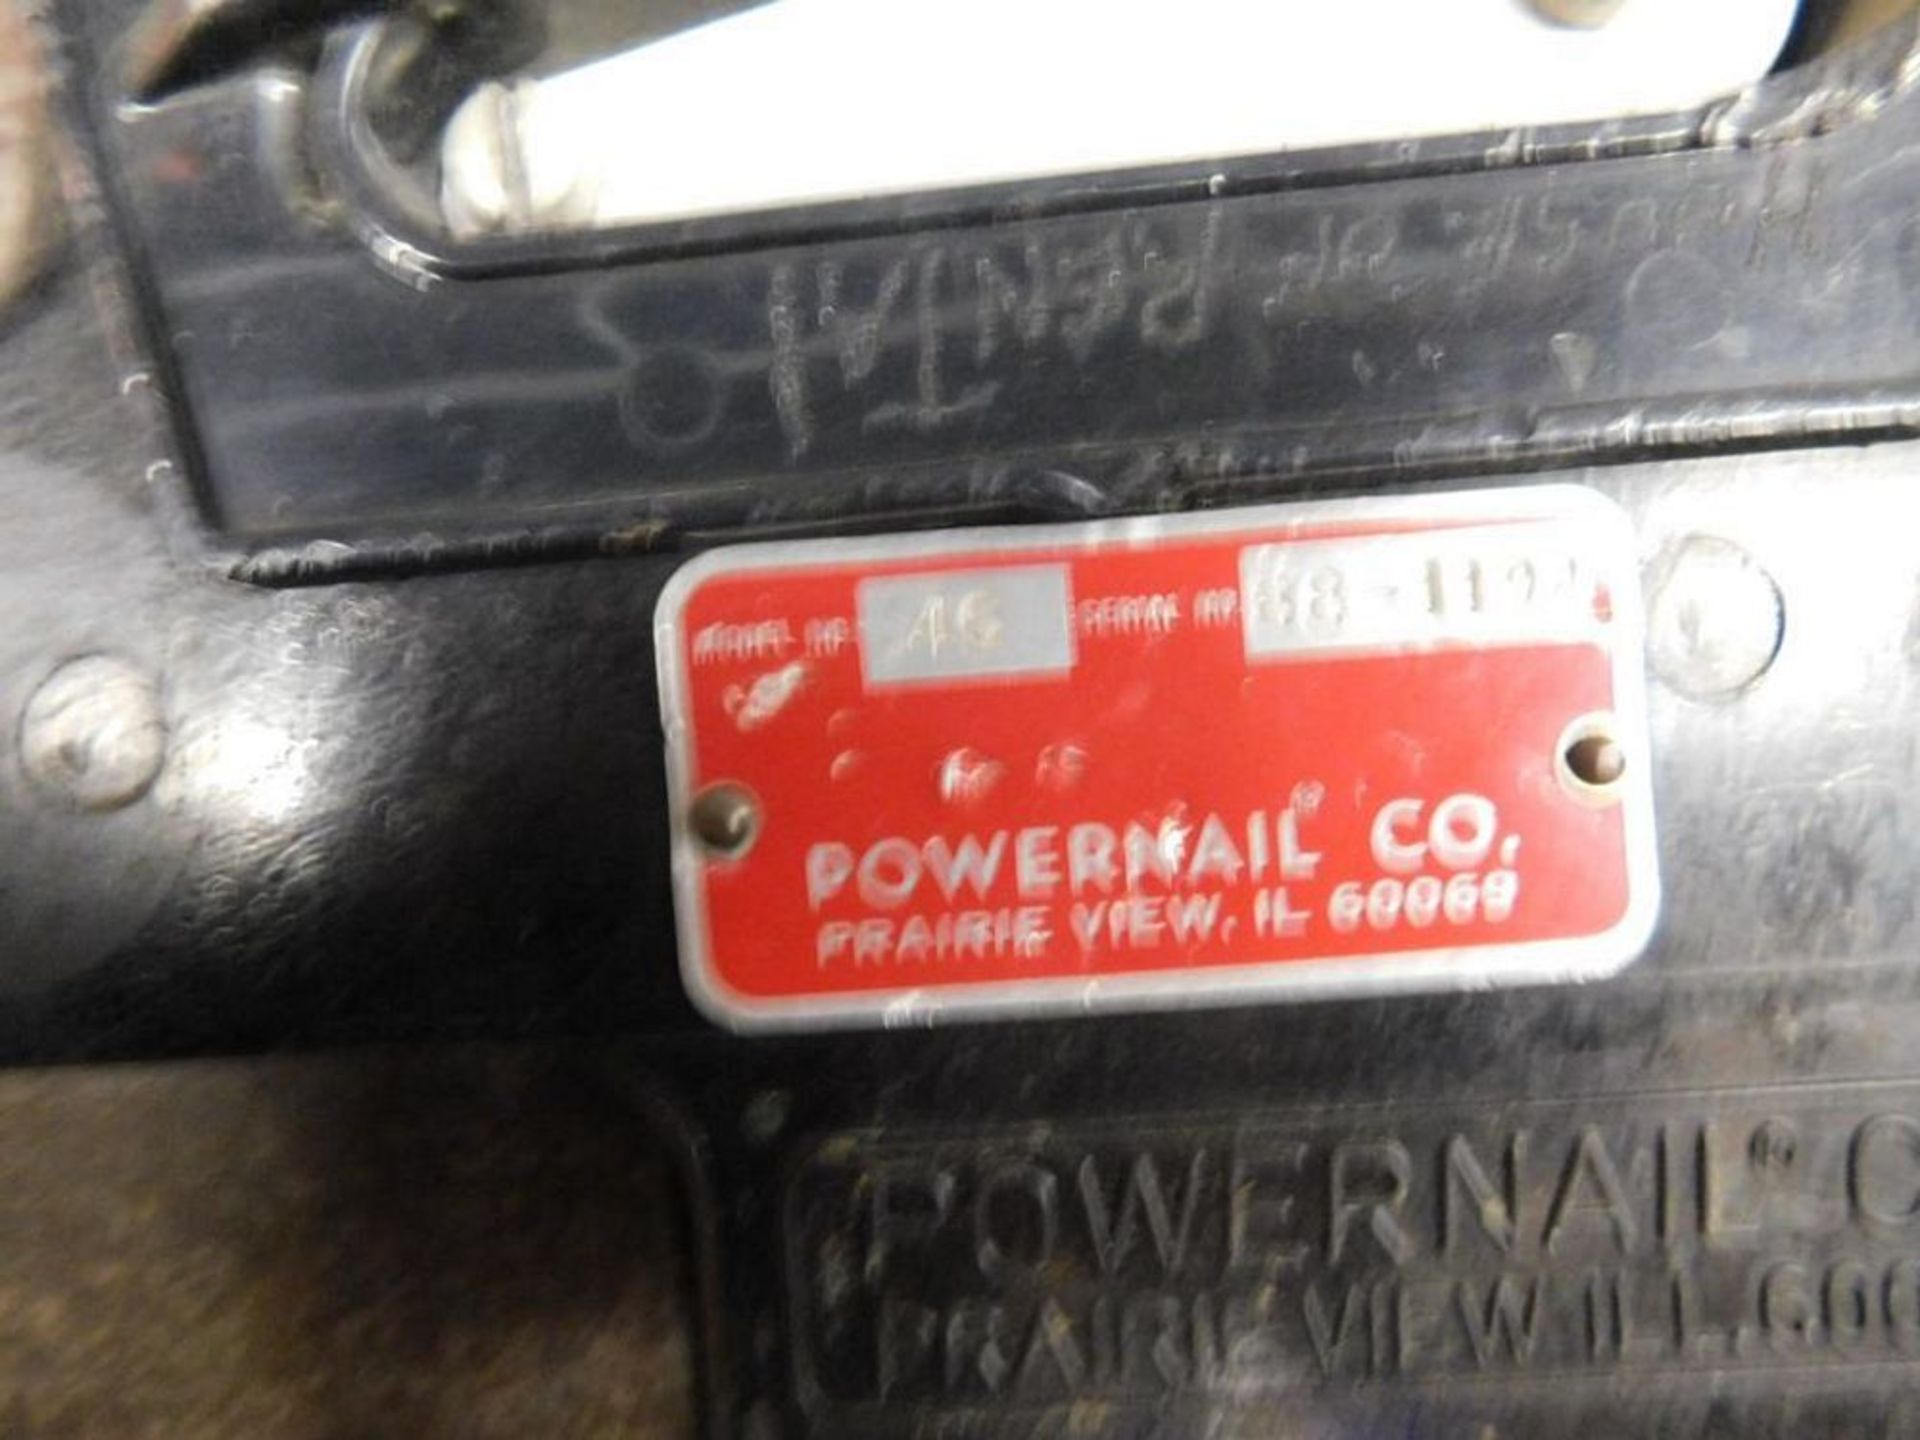 Powernail Manual Hardwood Floor Nailer, Model 45 (LOCATION: 318 N. Milwaukee Ave., Wheeling, IL - Image 4 of 4